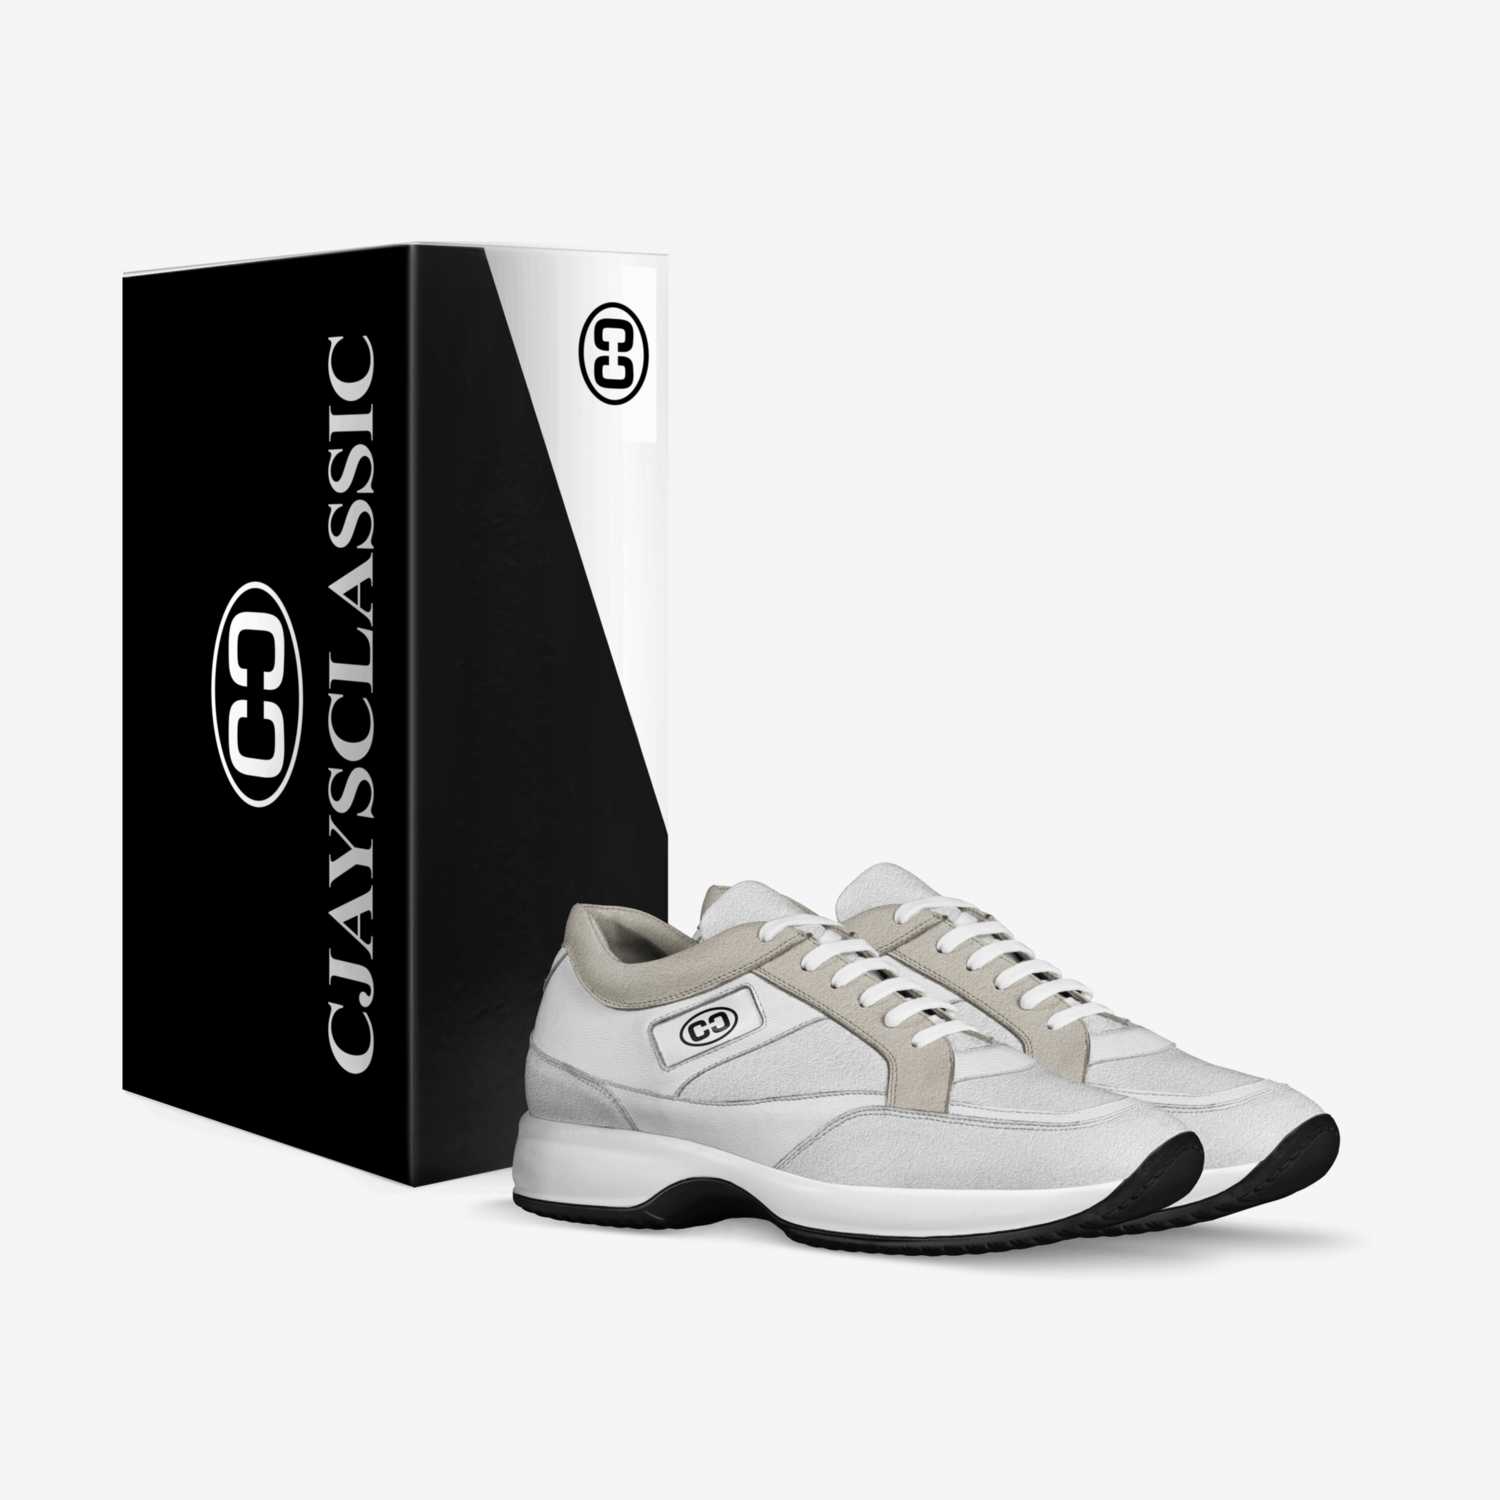 CJAYSCLASSIC custom made in Italy shoes by Chijioke Okoye | Box view